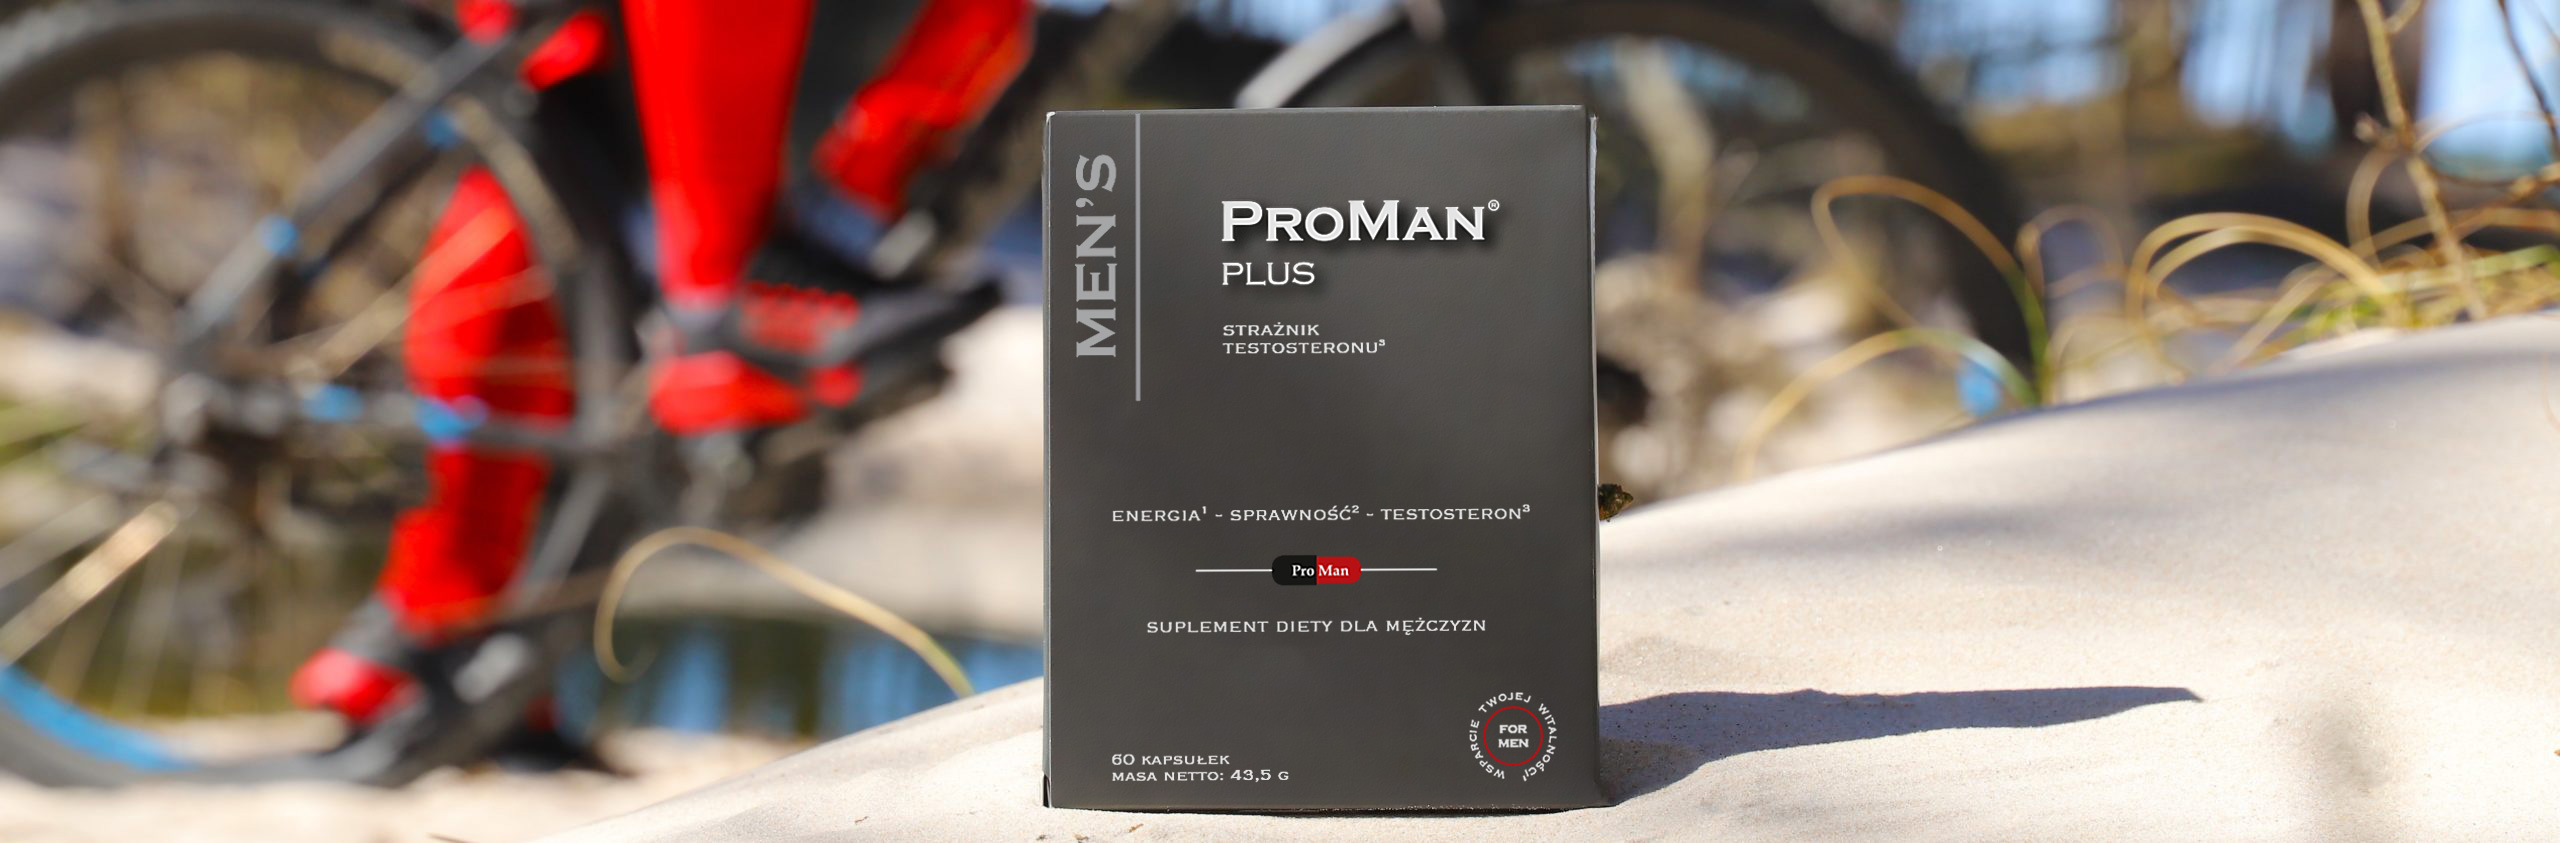 Opakowanie ProMan Plus na tle roweru